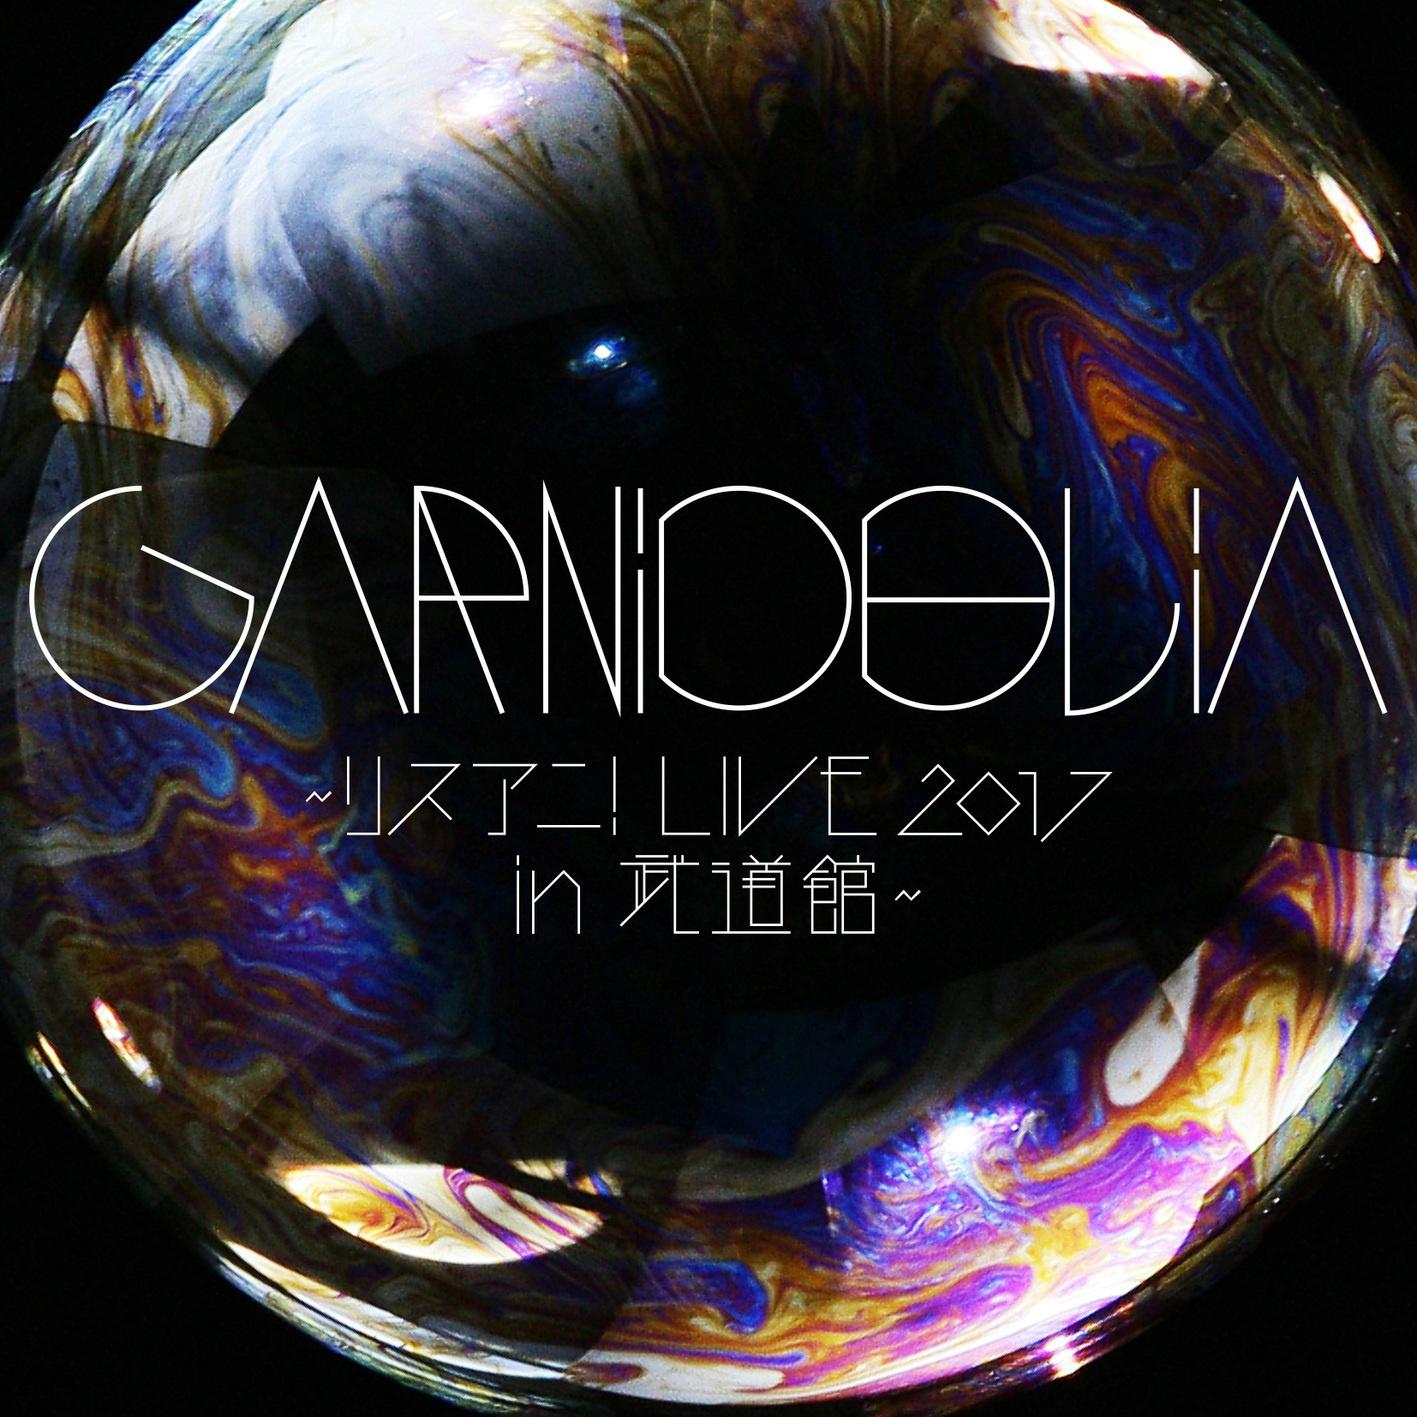 GARNiDELiA ! LIVE 2017 in wu dao guan